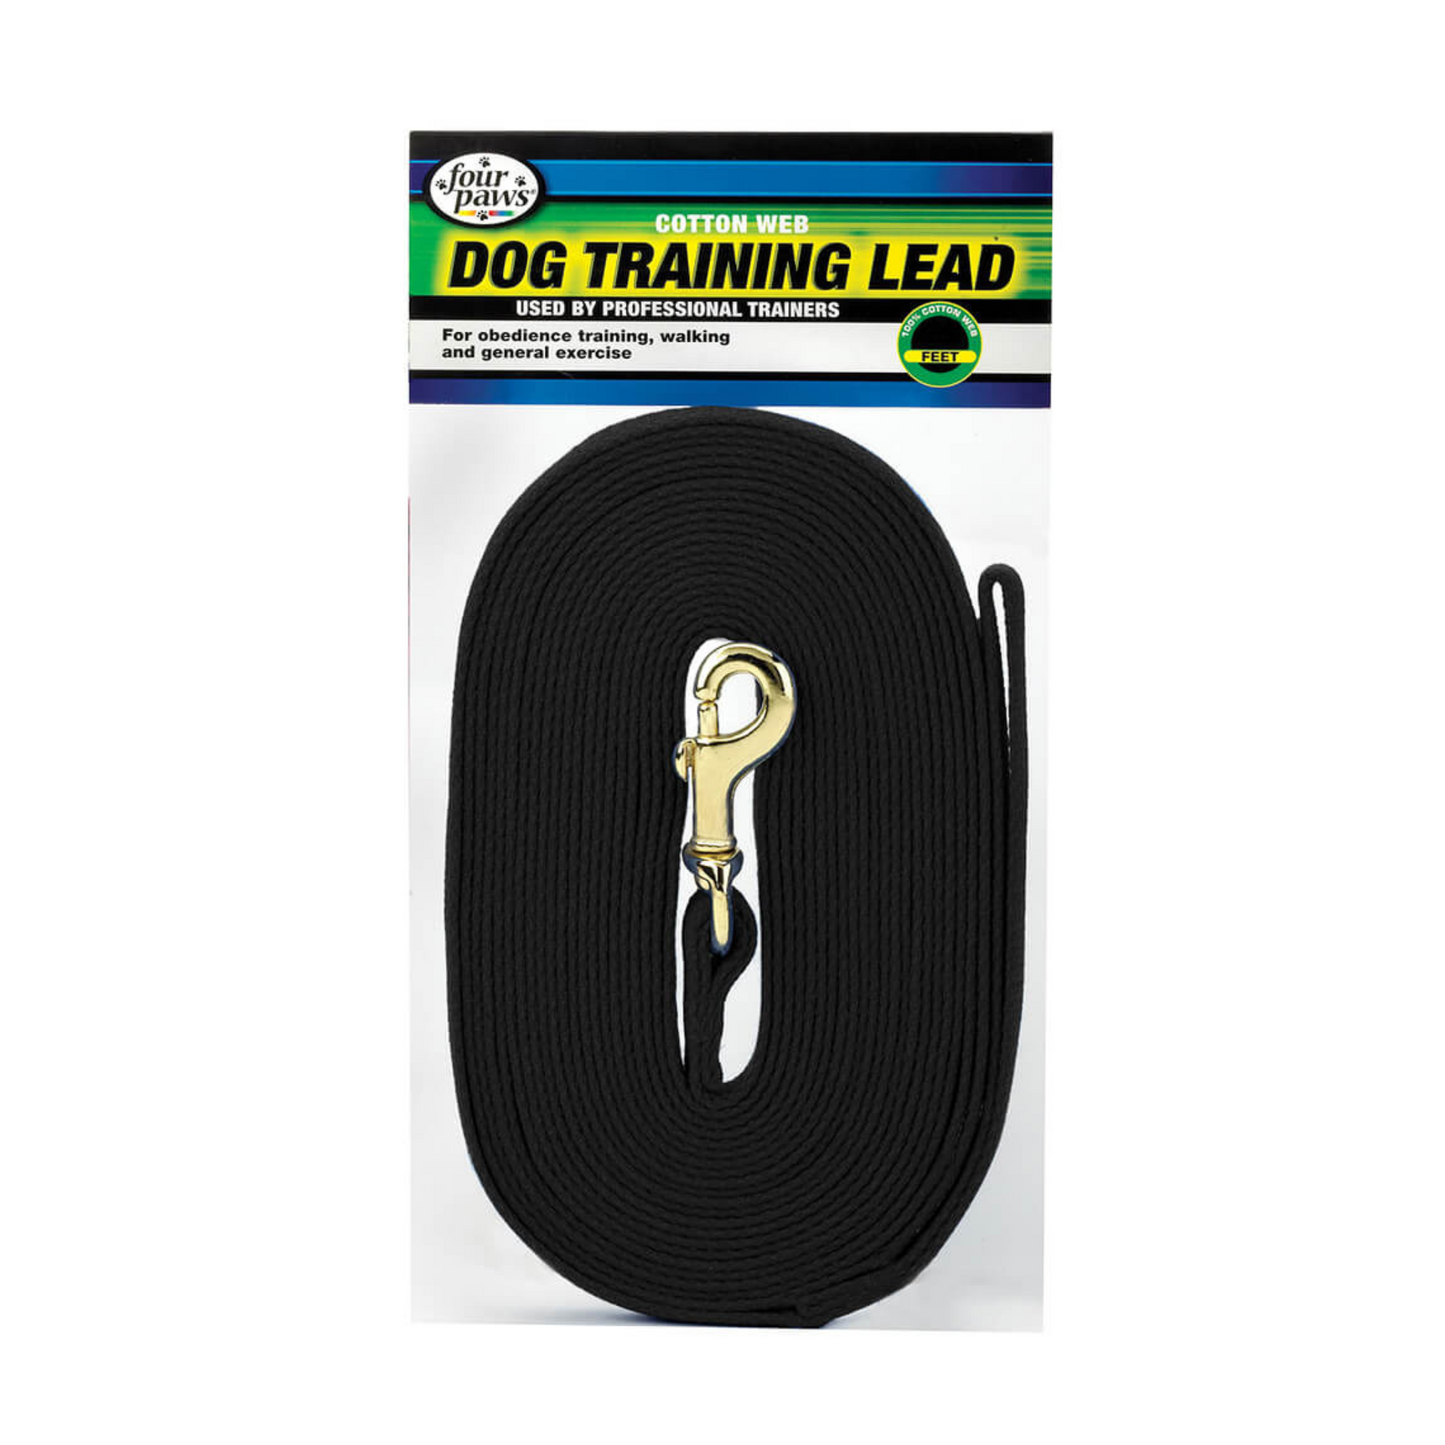 Four Paws Cotton Web Dog Training Lead 10' Long x 5/8"W Black